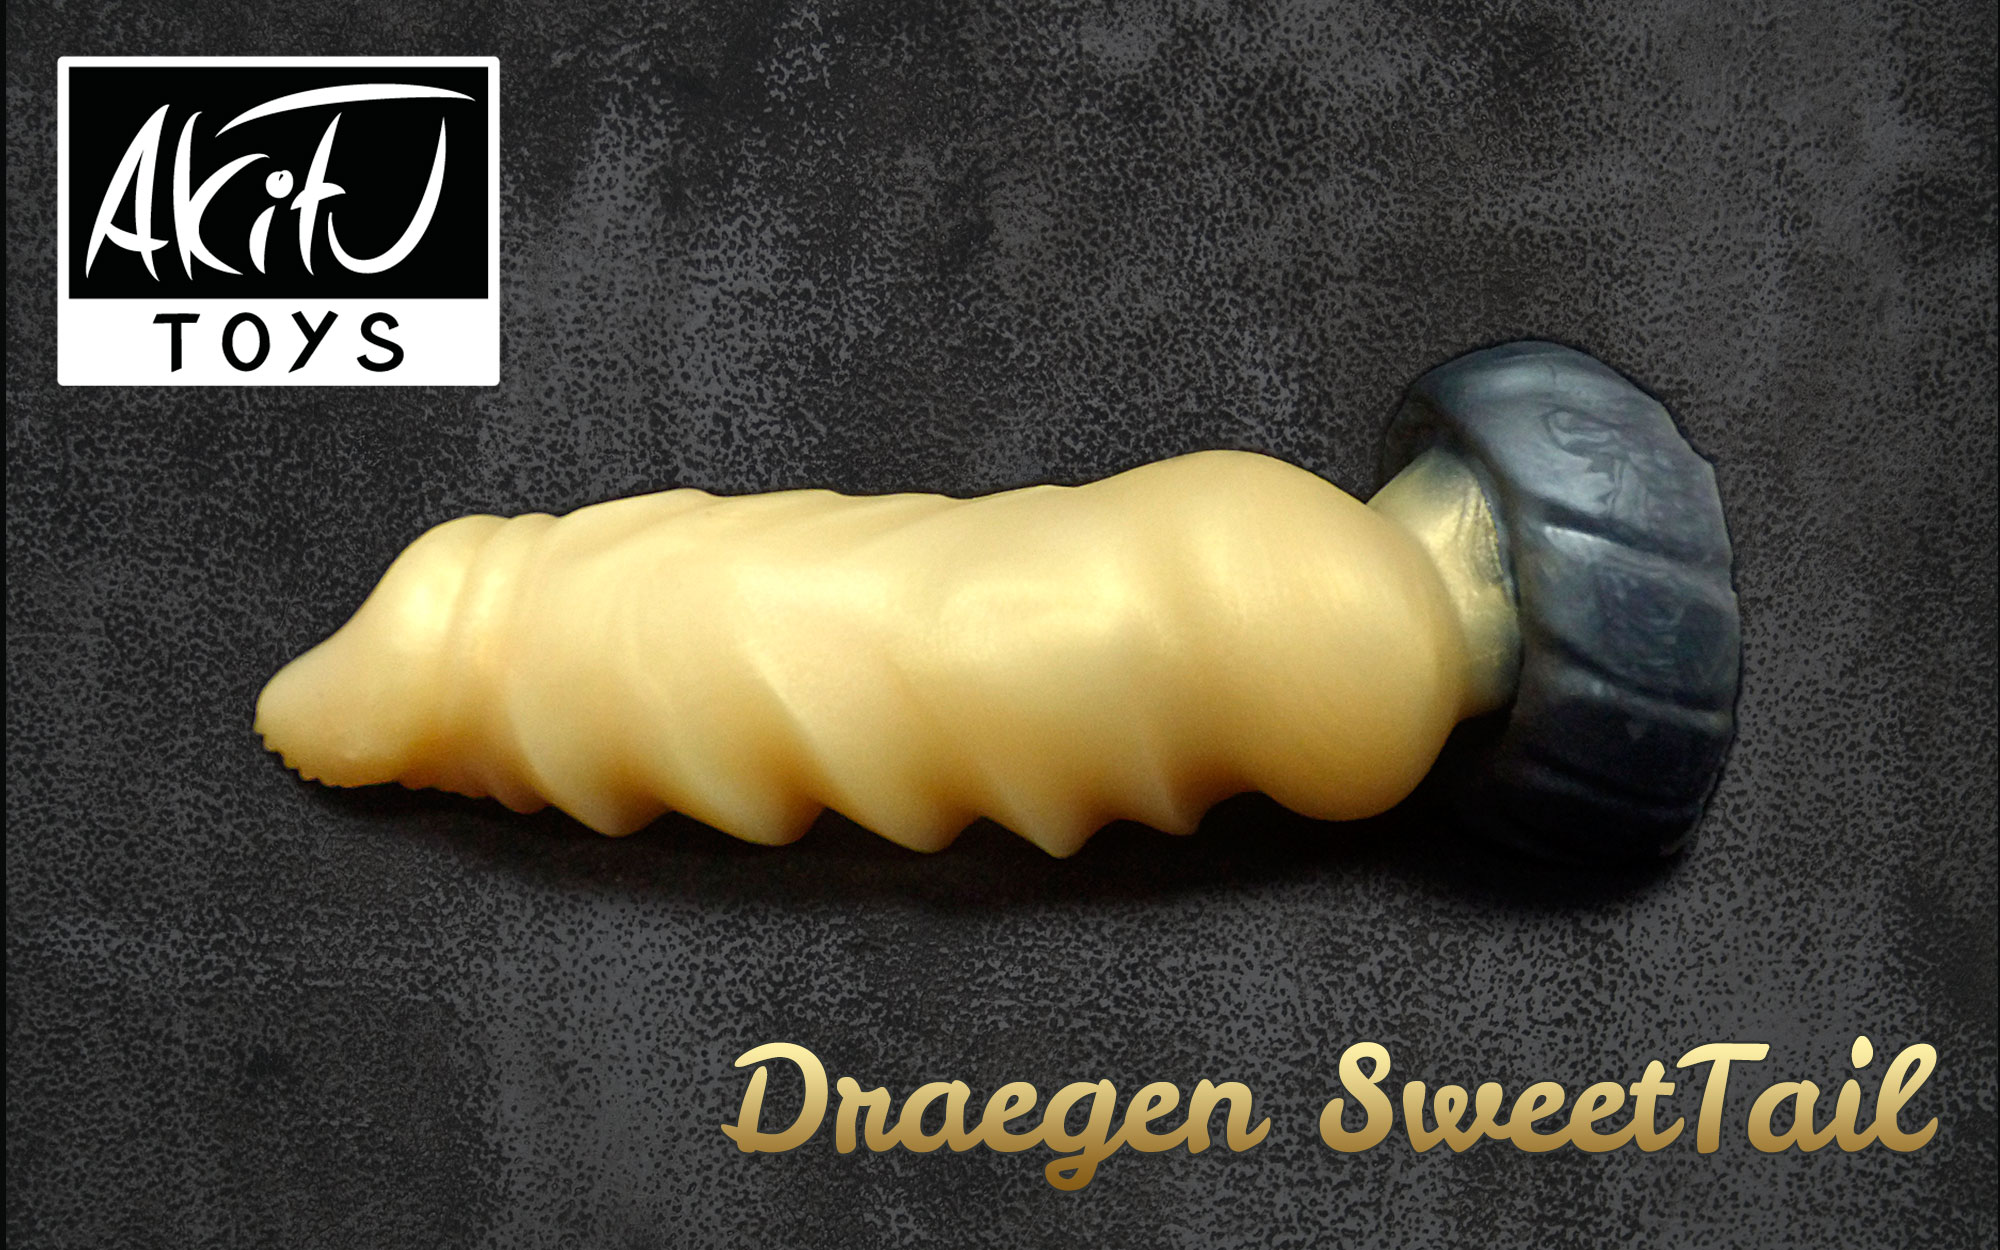 Draegen Sweettail